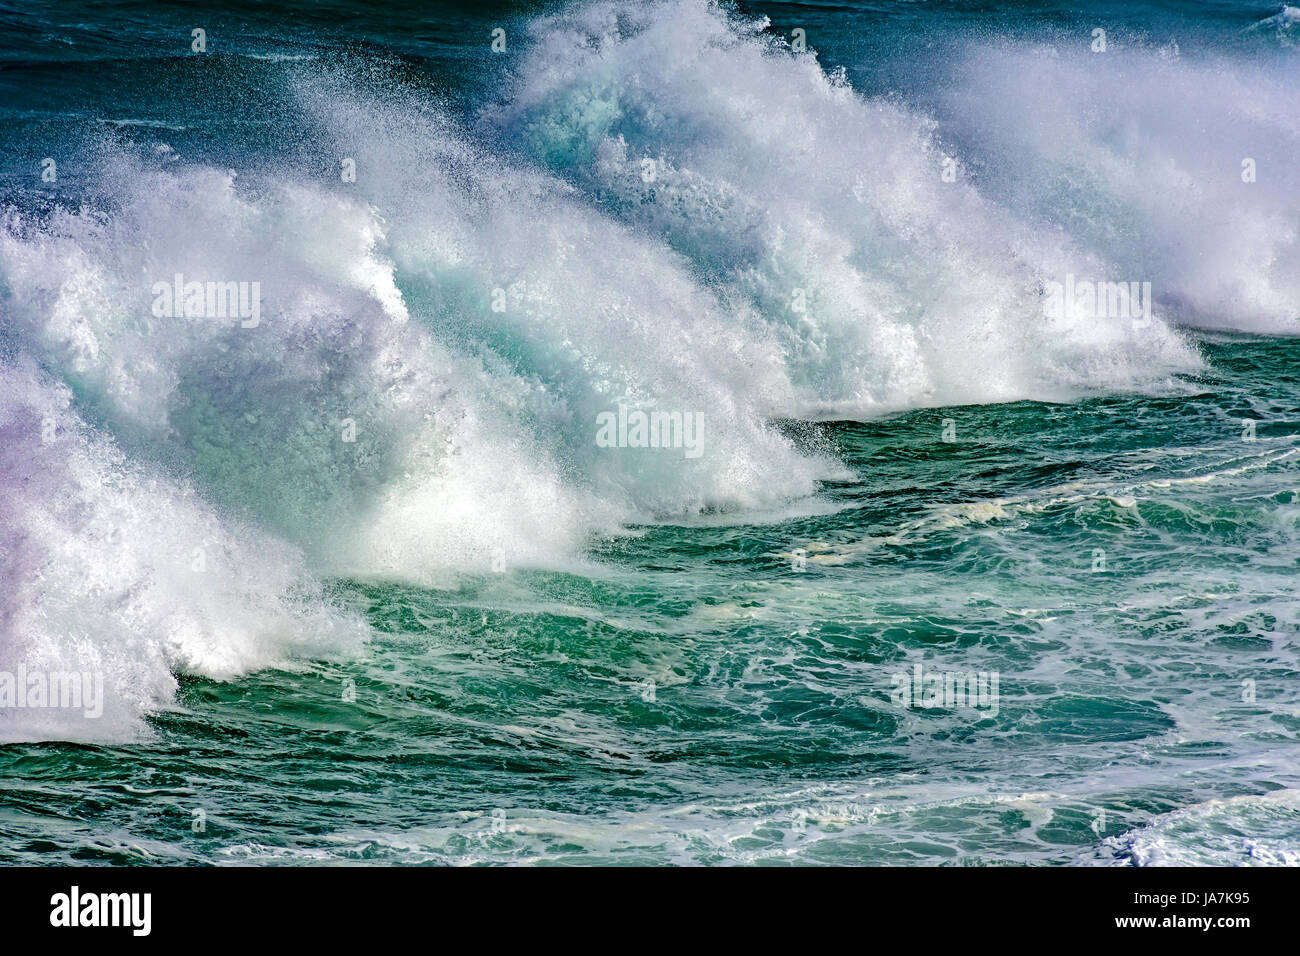 Wave crashing against rocks during storm Stock Photo